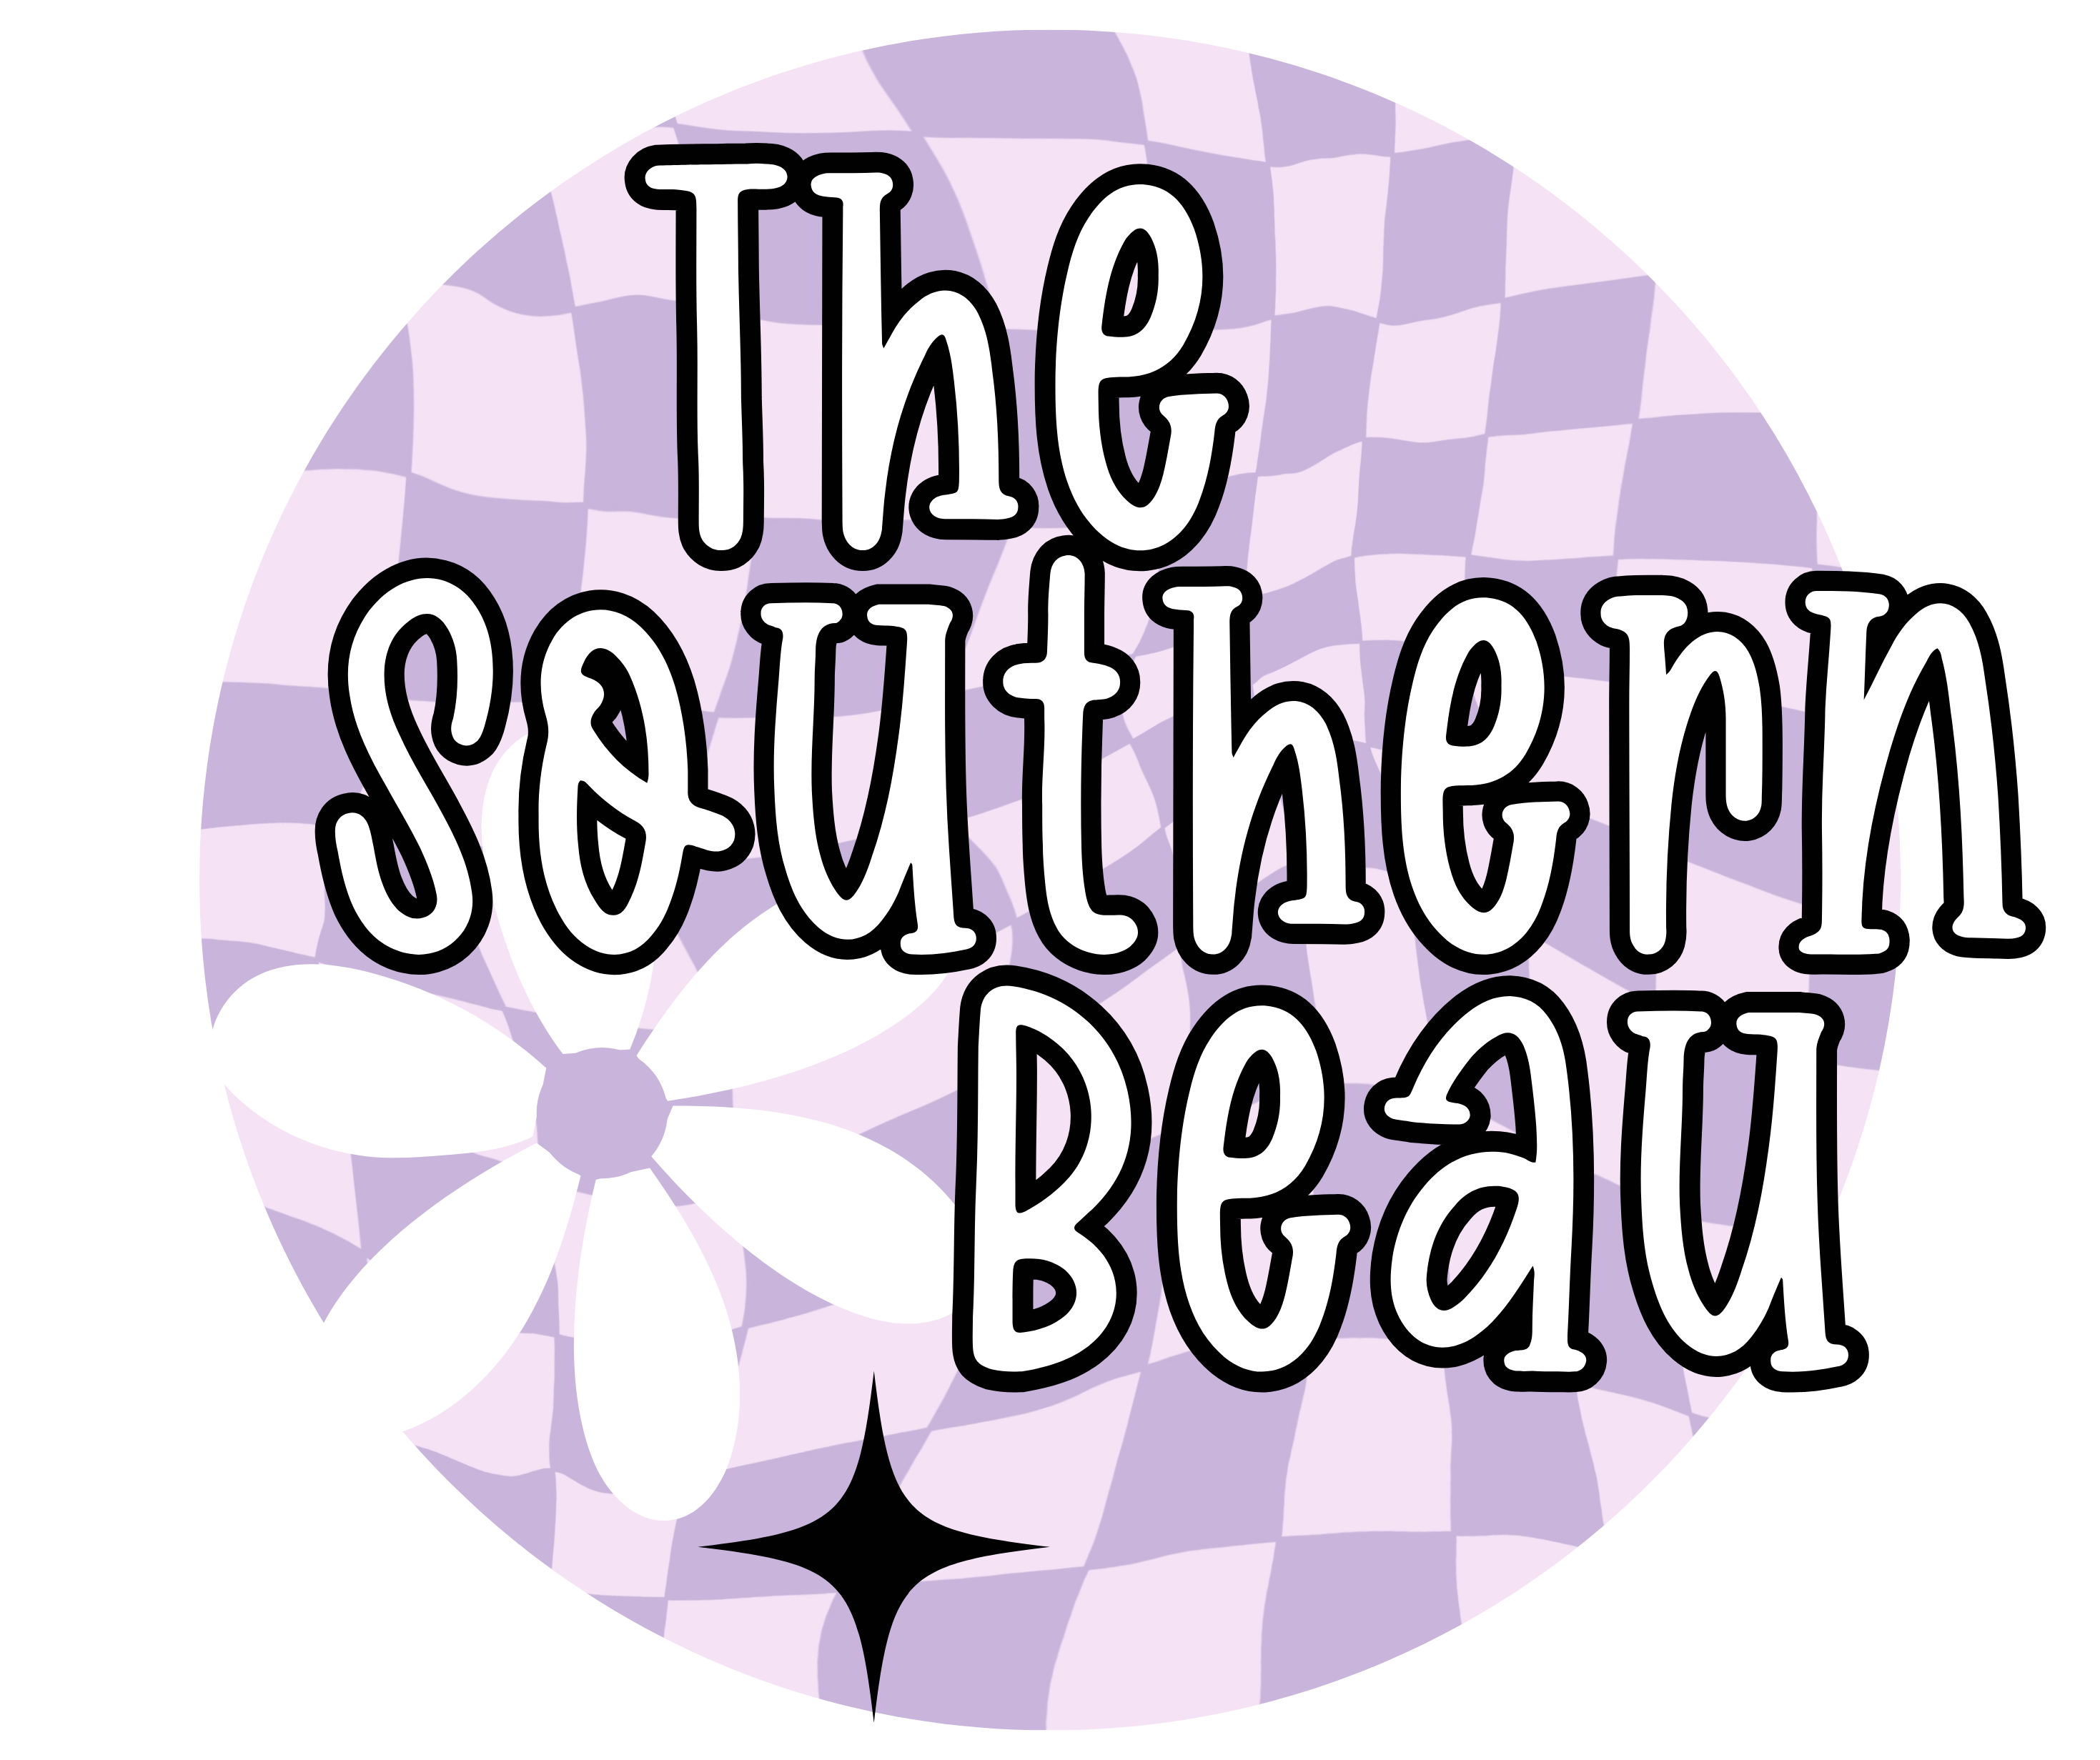 The Southern Beau 